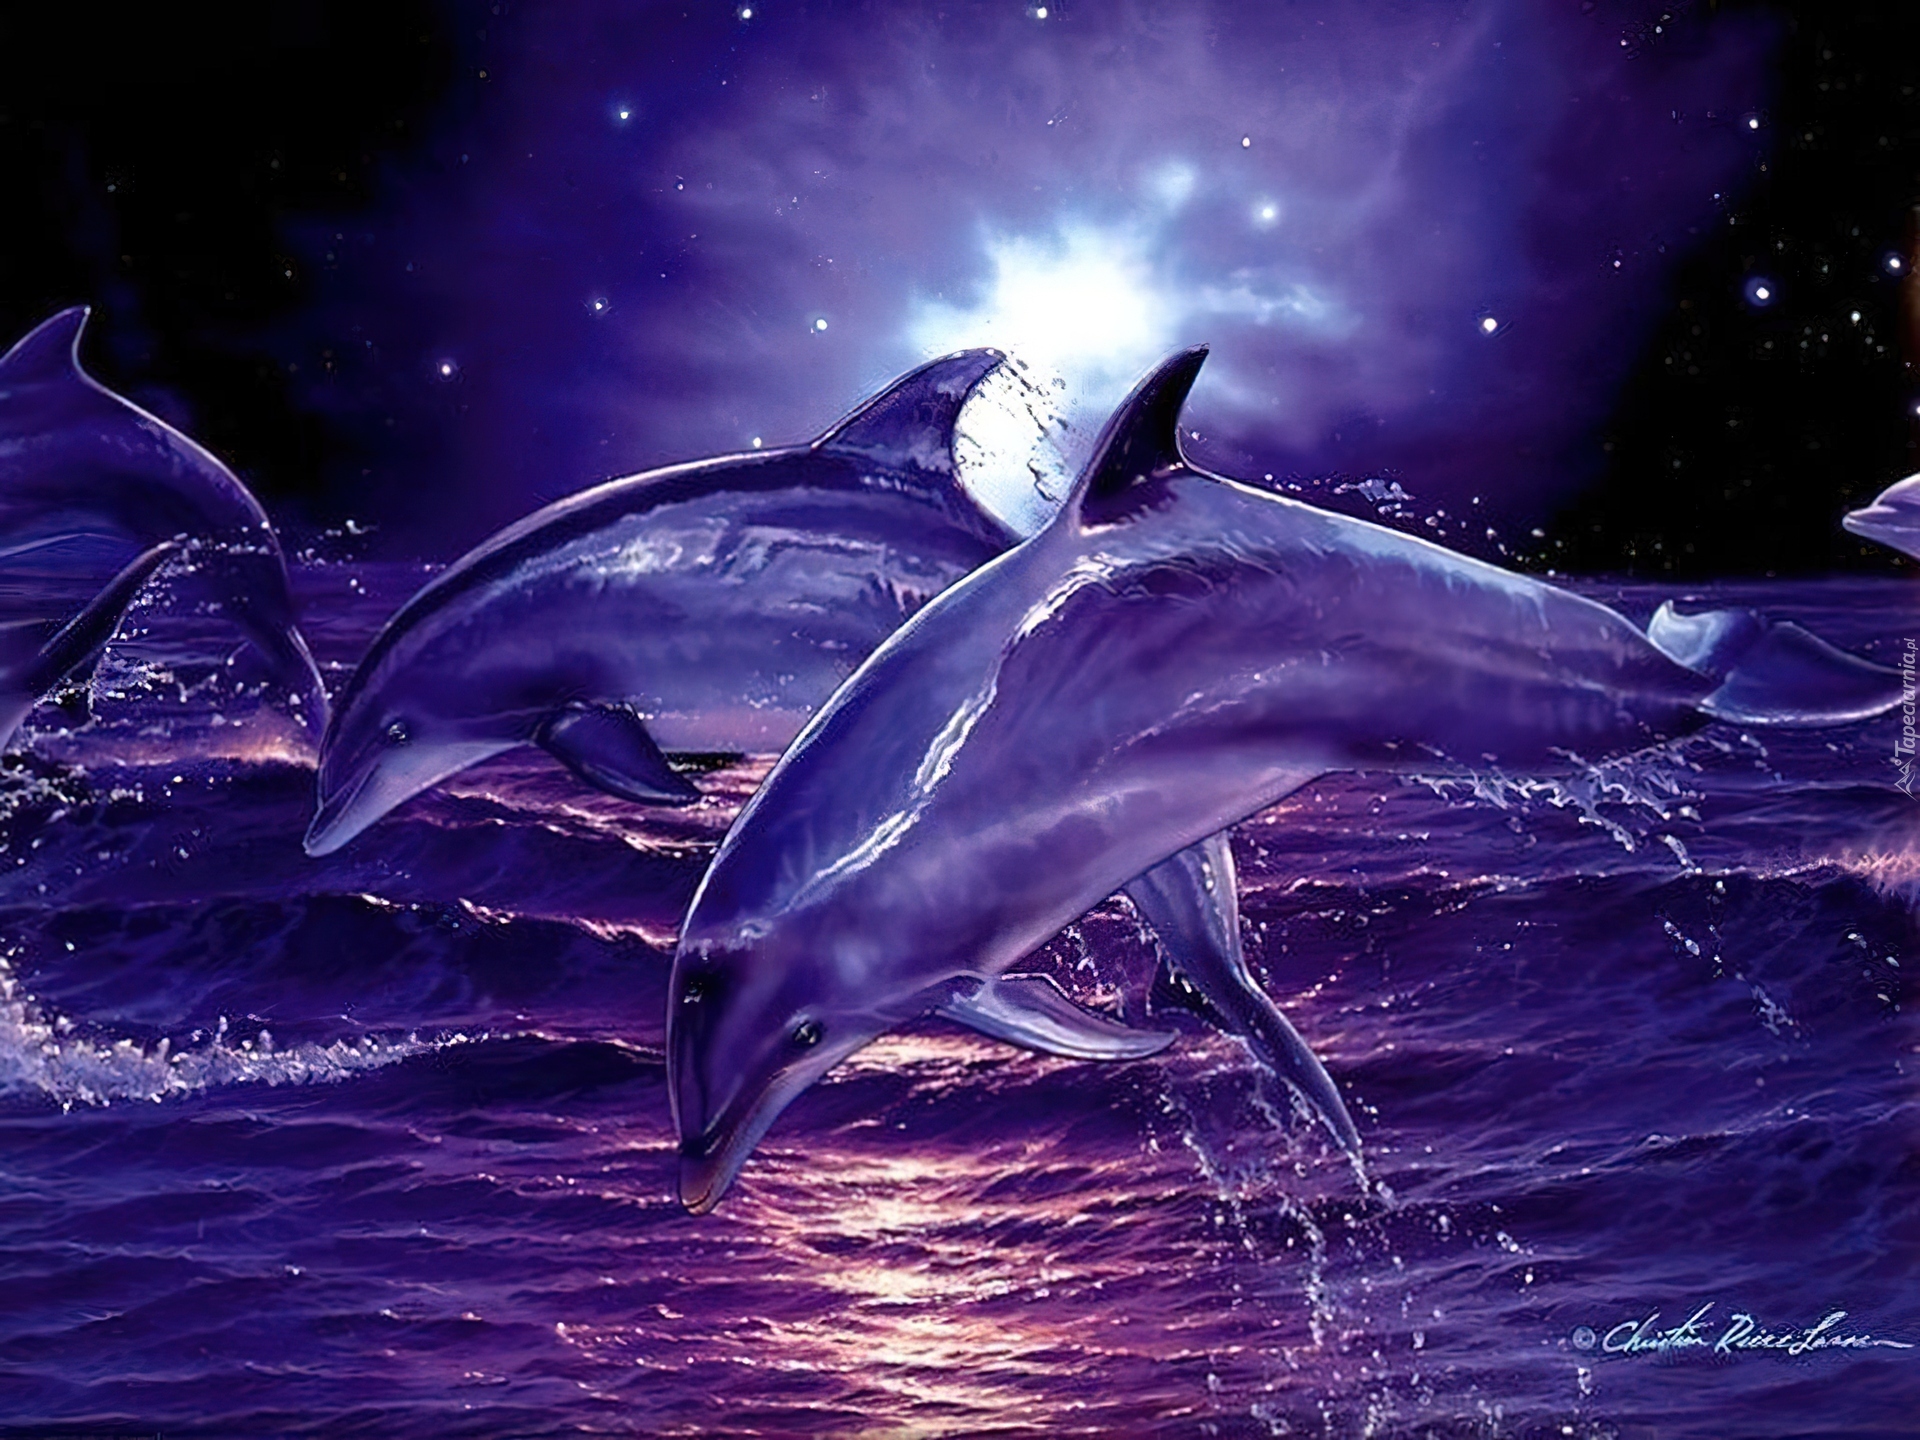 Delfiny, Morze, Fale